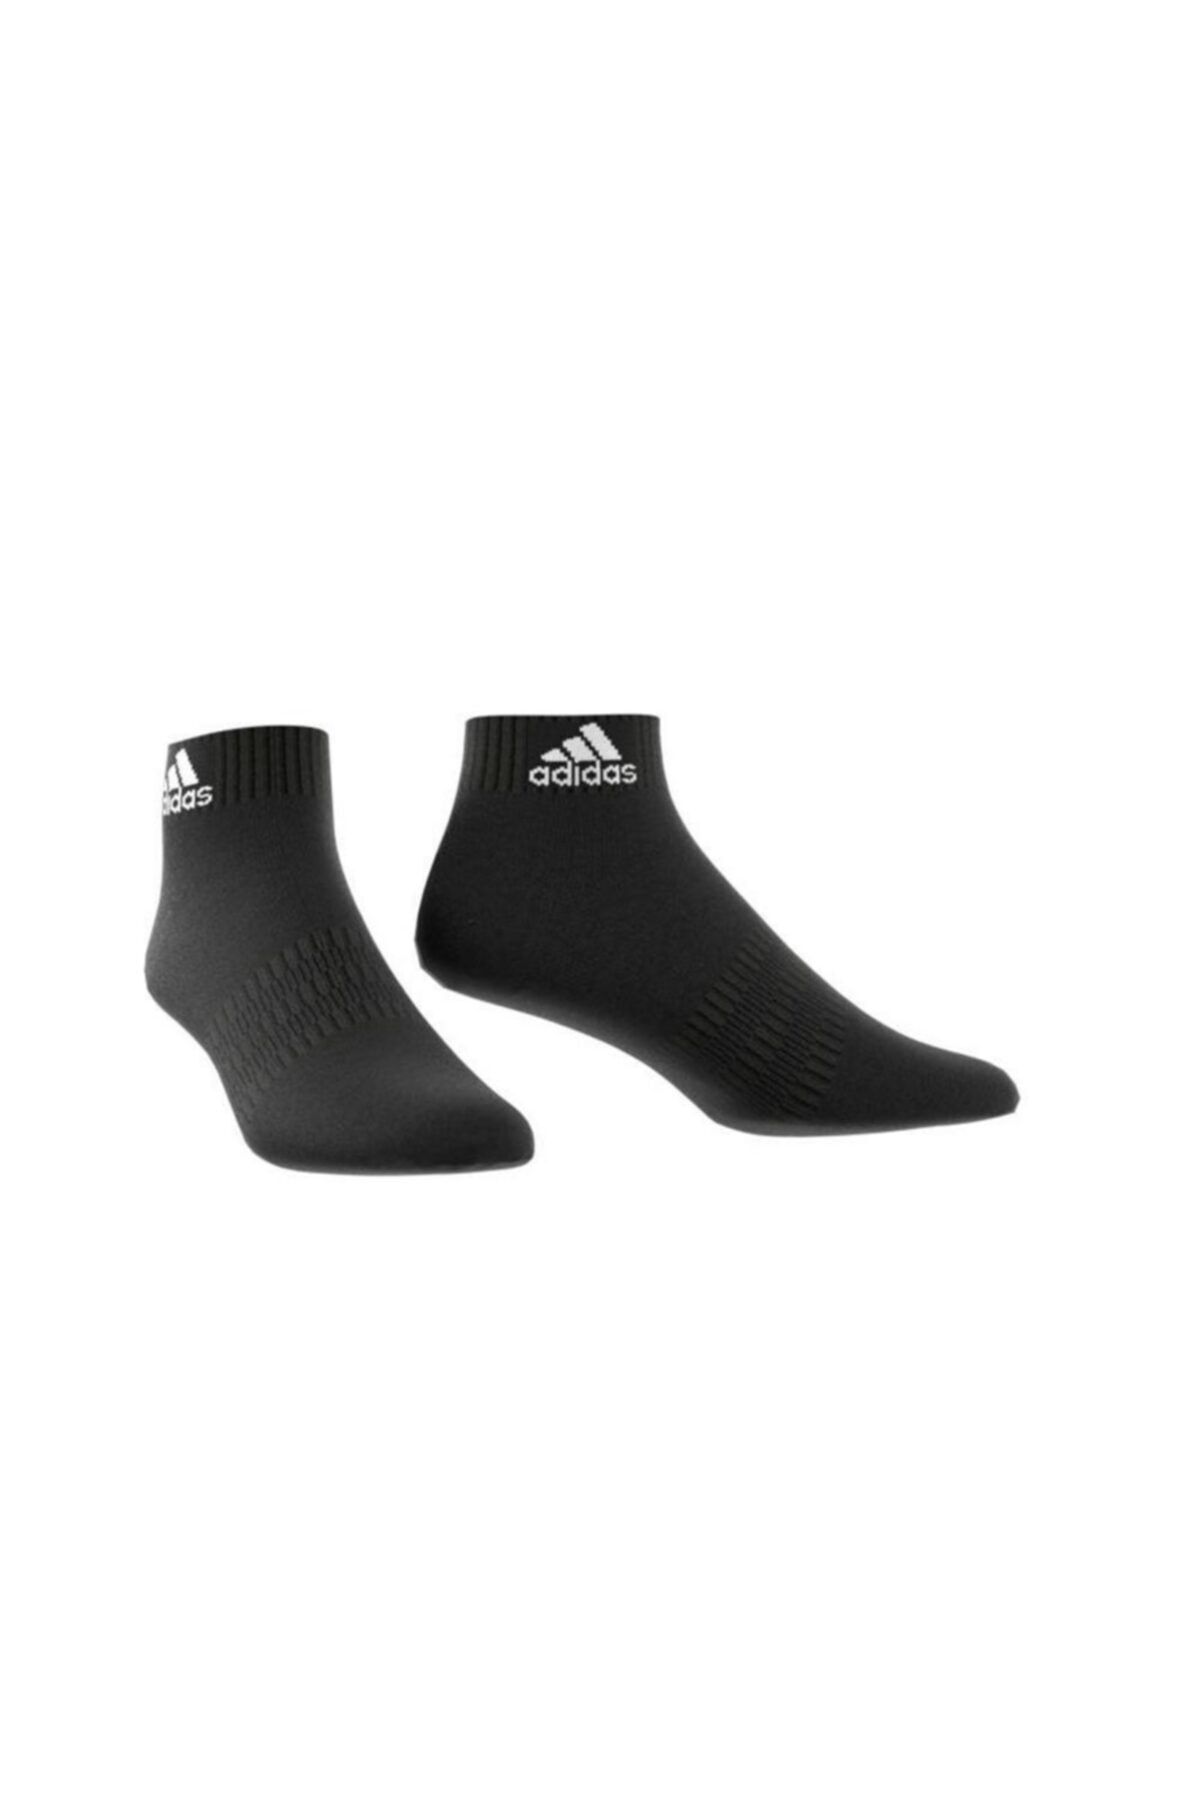 adidas Dz9368 Cush Ank Siyah Çorap